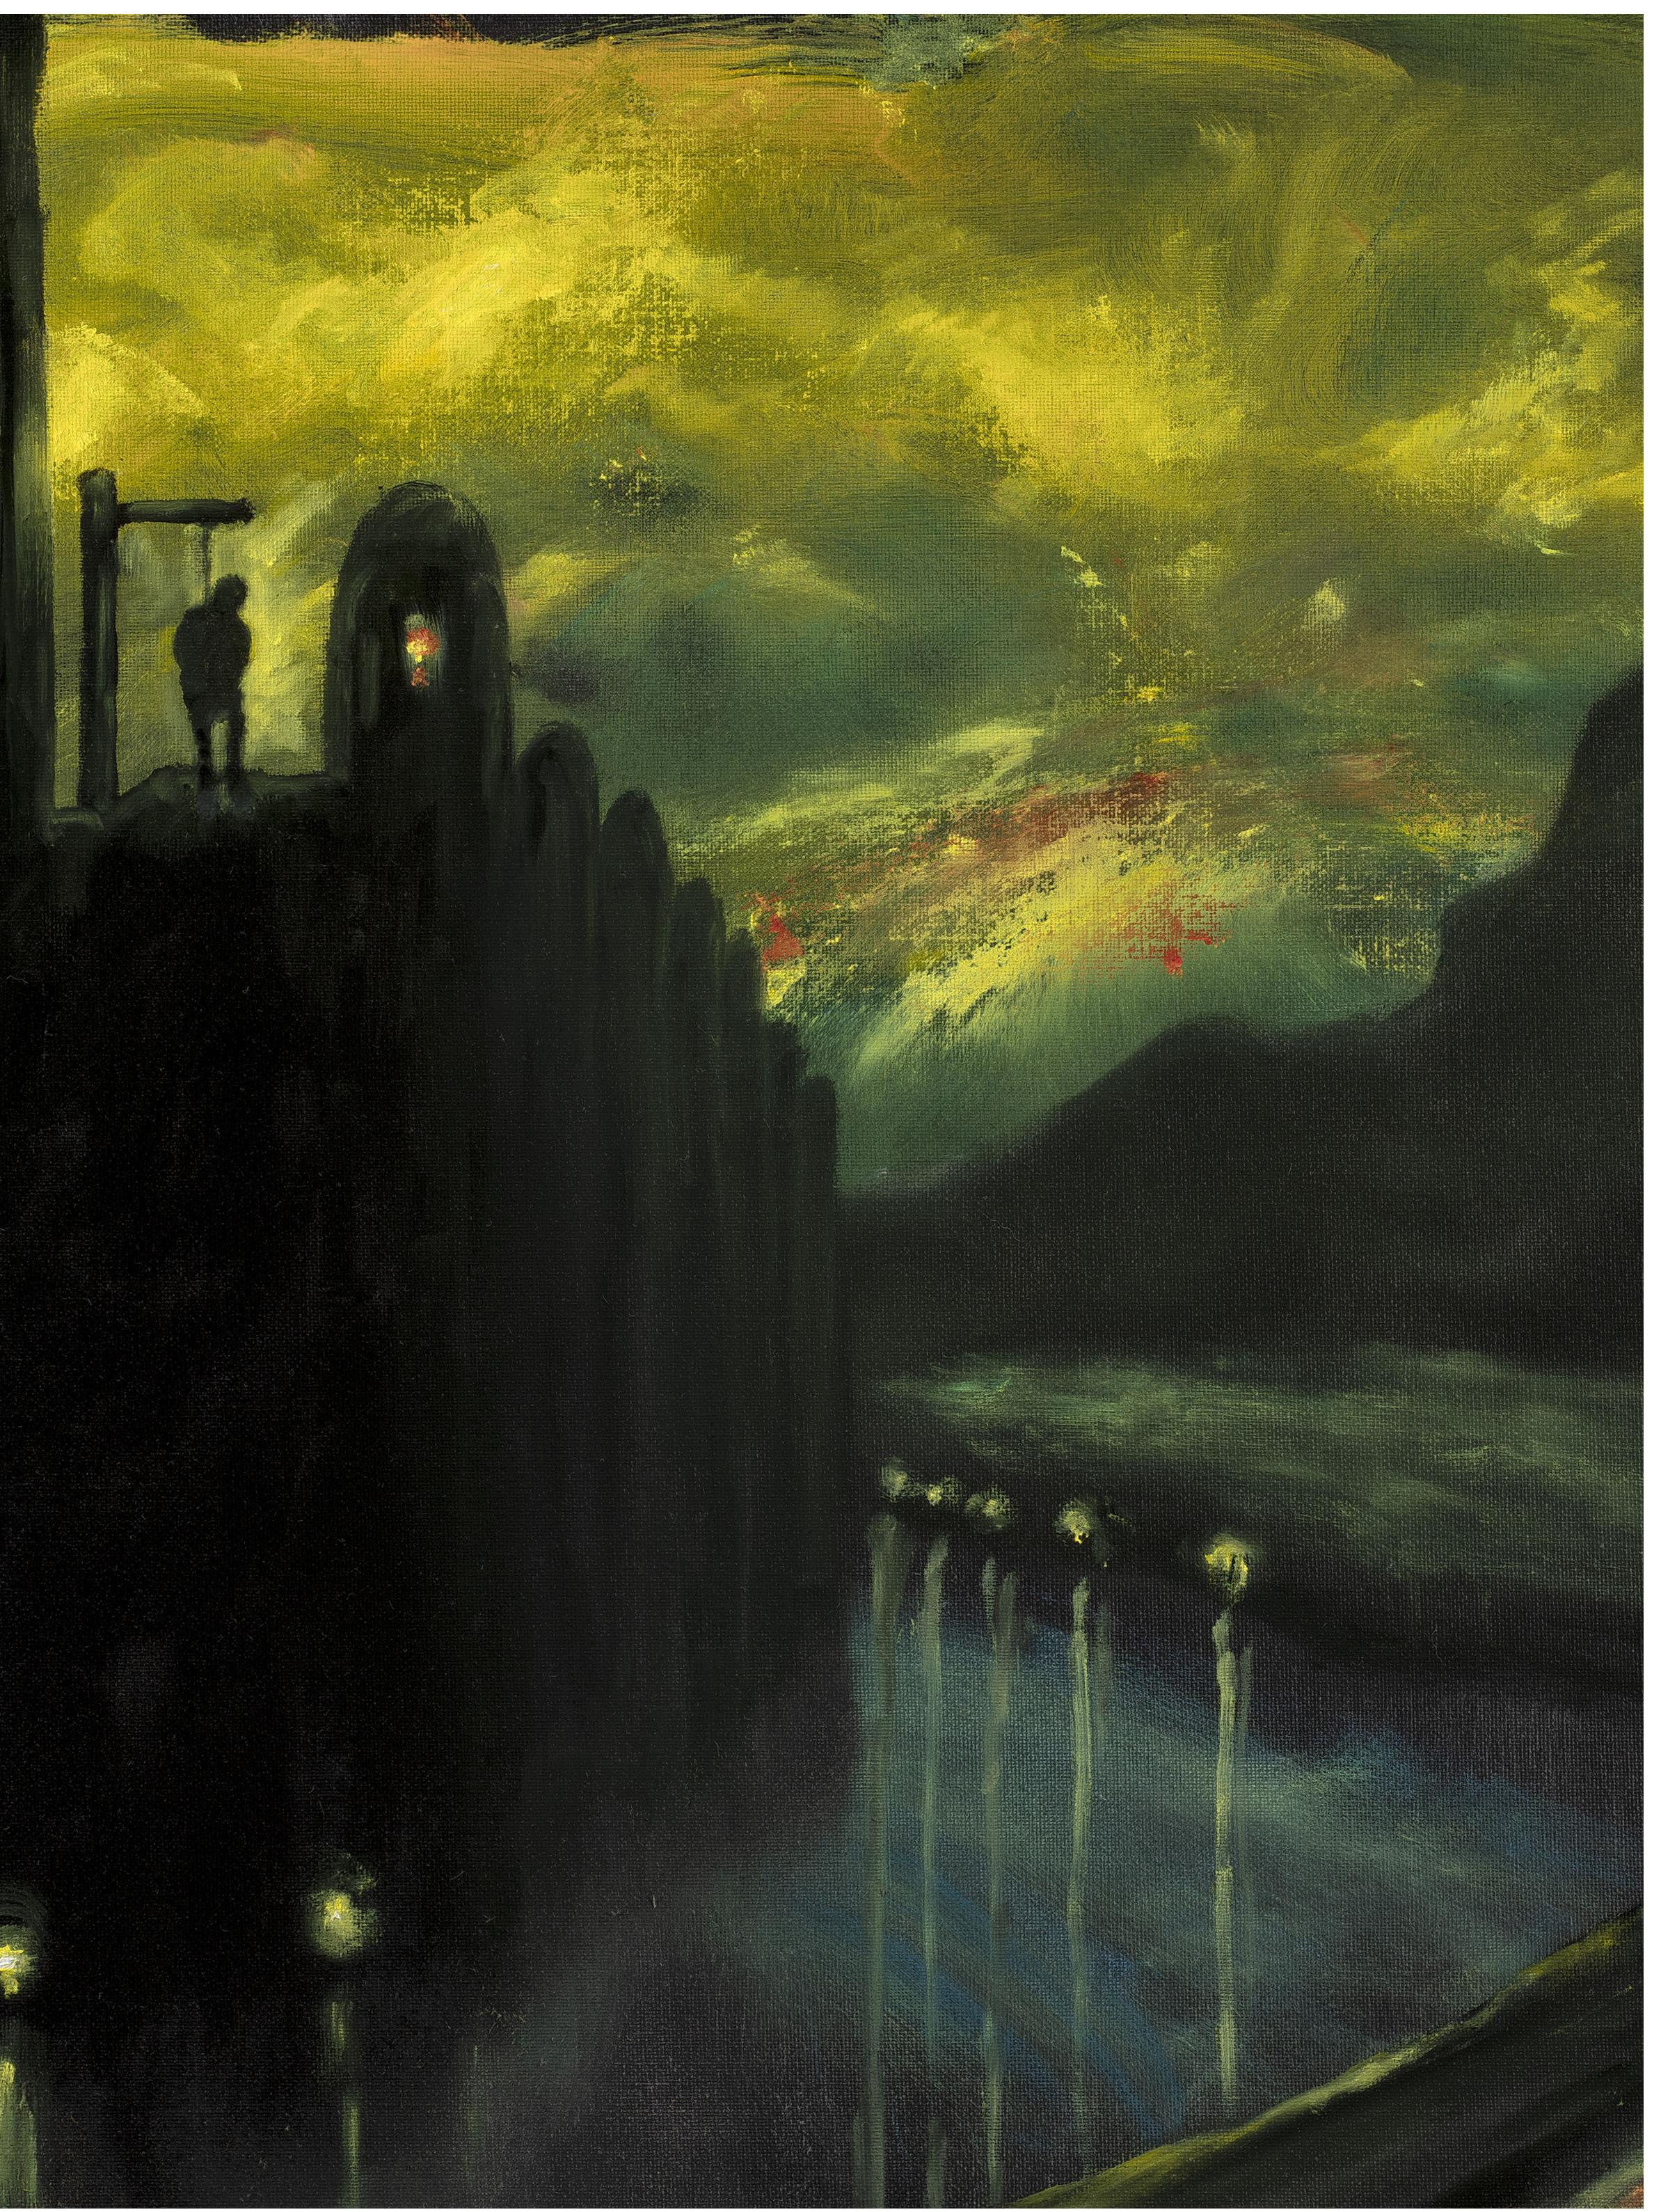 Matthew Bateson - "A Sad Farewell", oil on canvas board, 50 x 40 cm